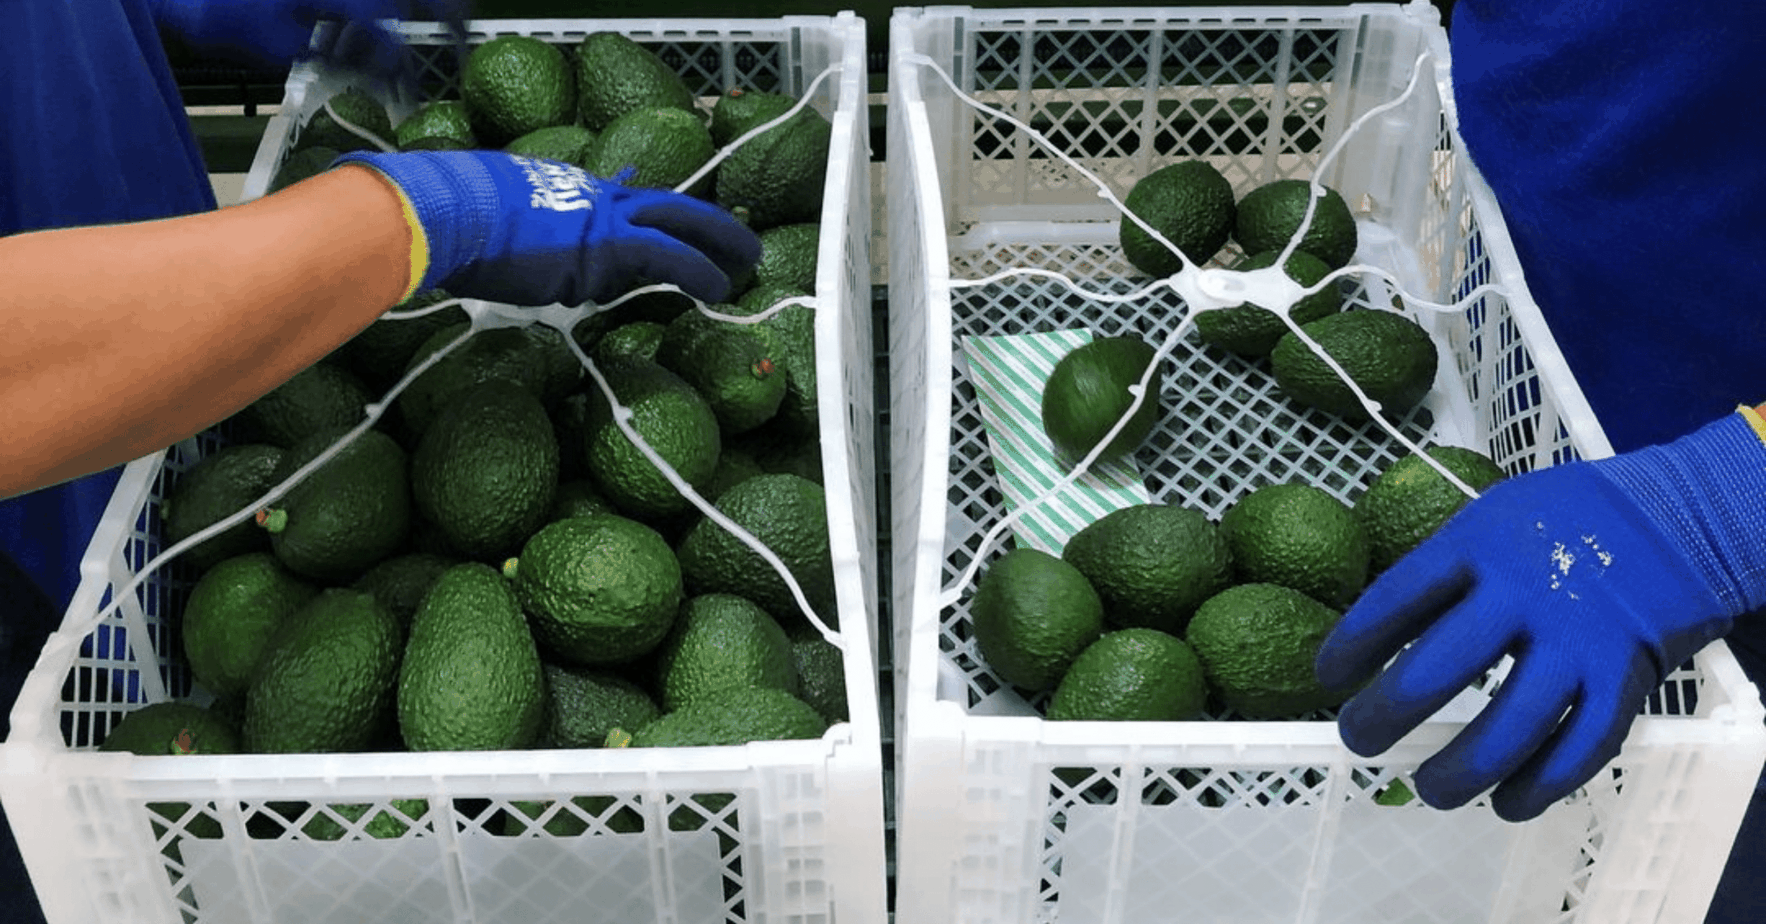 Safeguarding Kenya’s avocado export market